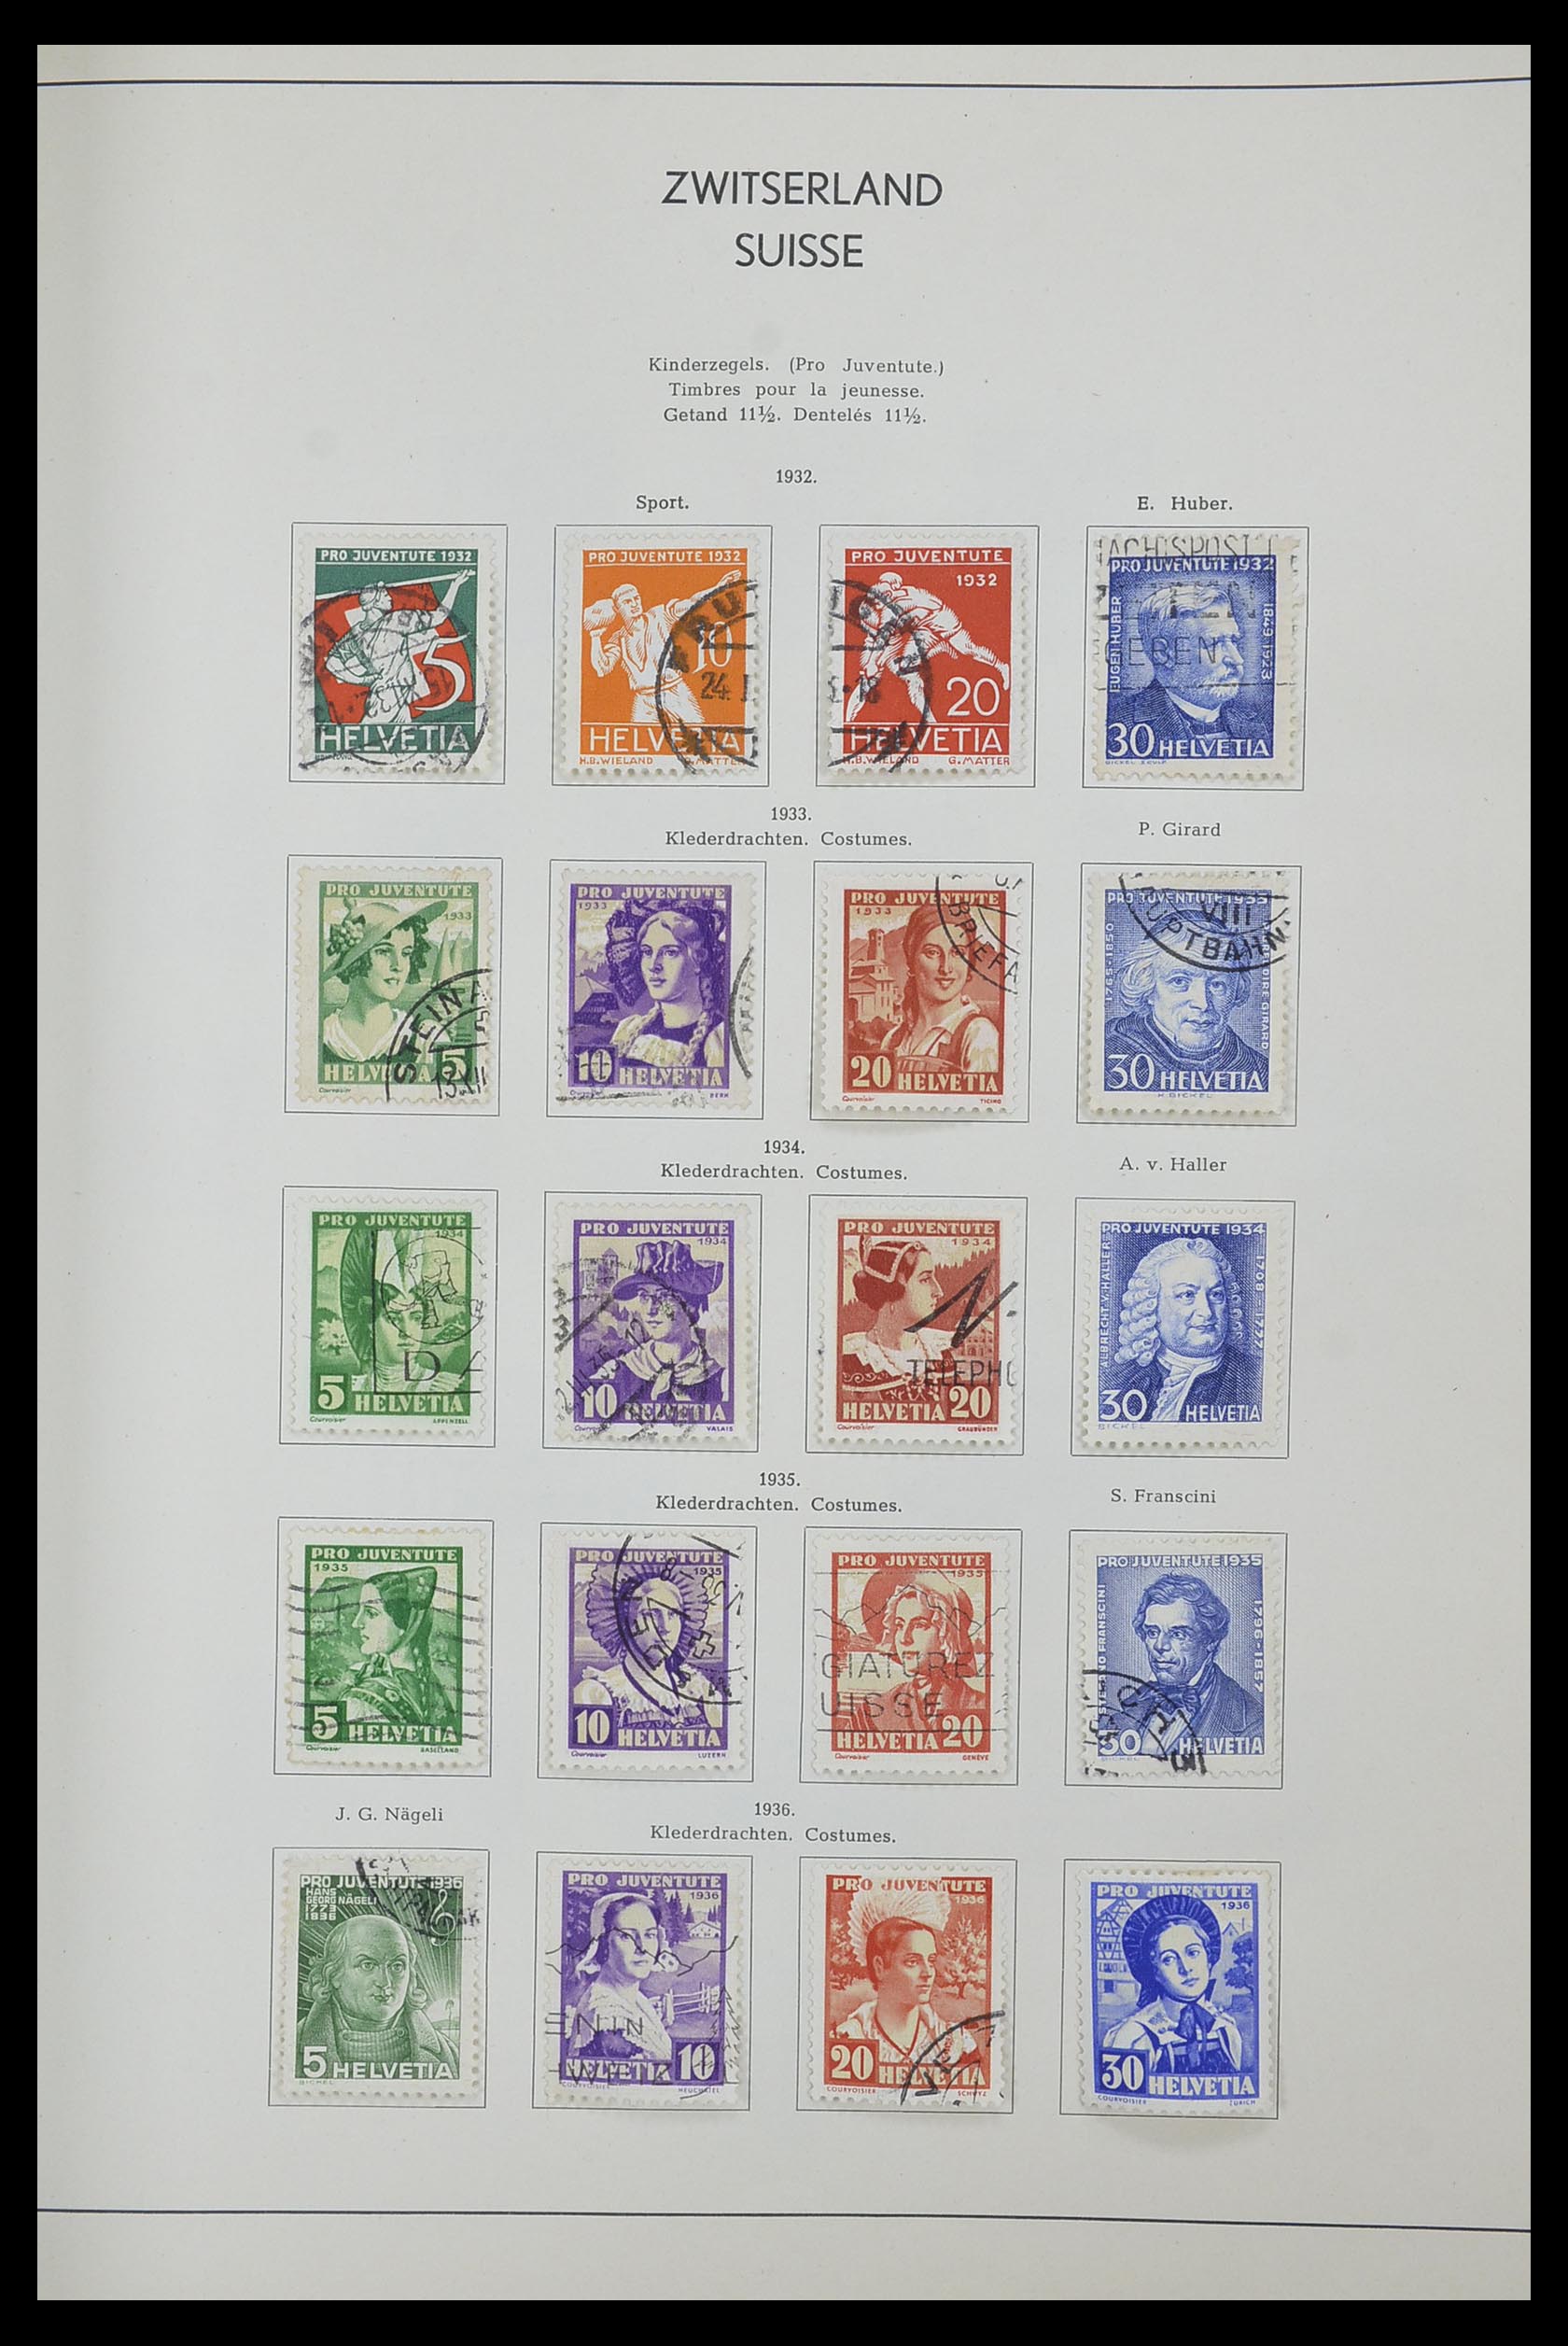 33601 014 - Stamp collection 33601 Switzerland 1854-1985.